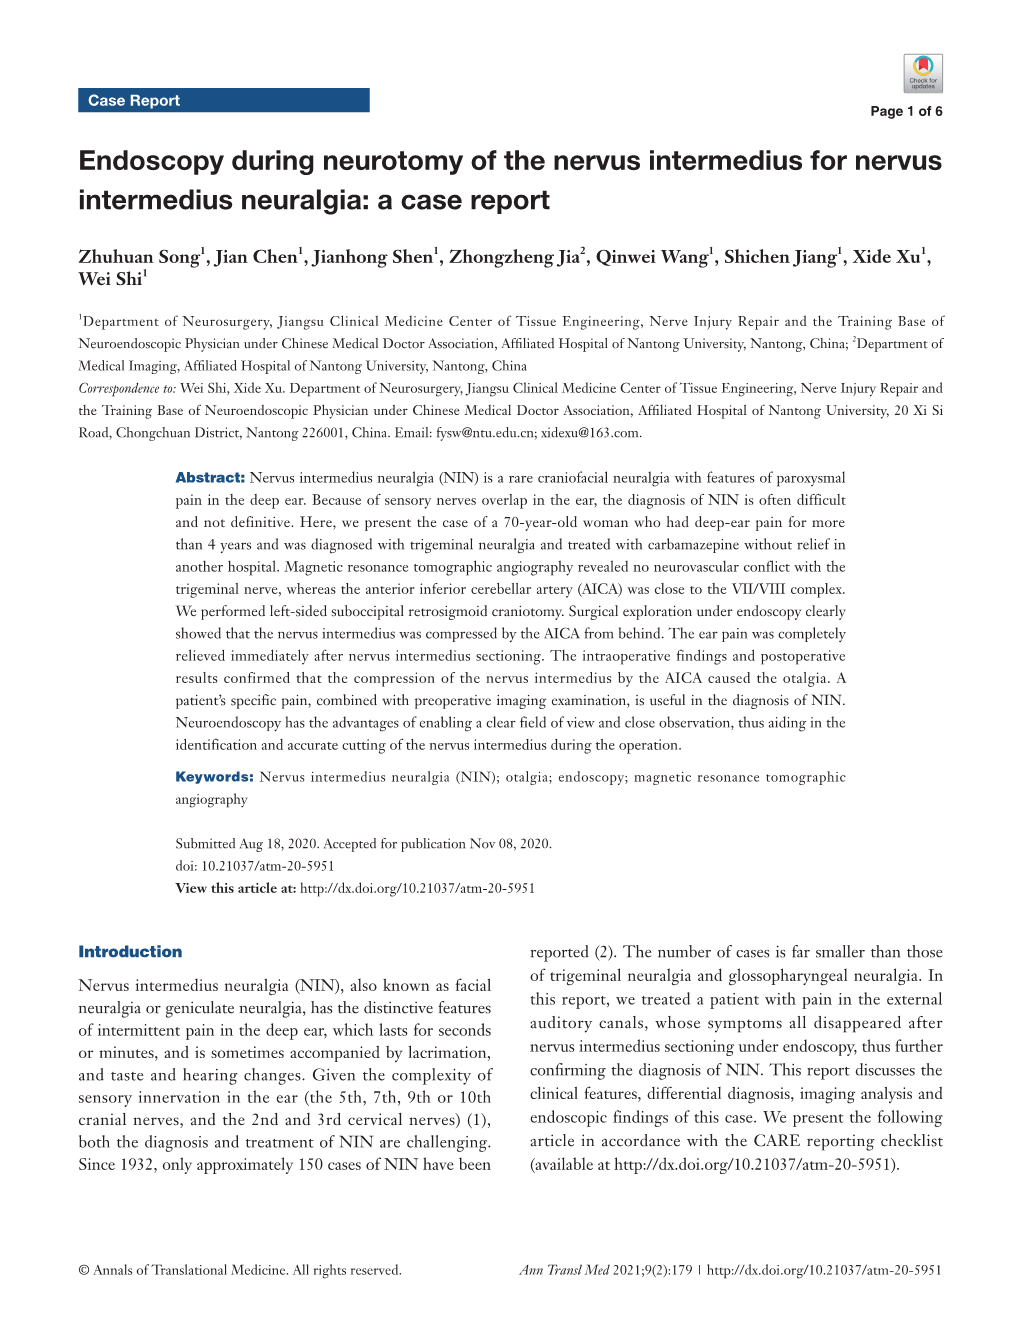 Endoscopy During Neurotomy of the Nervus Intermedius for Nervus Intermedius Neuralgia: a Case Report